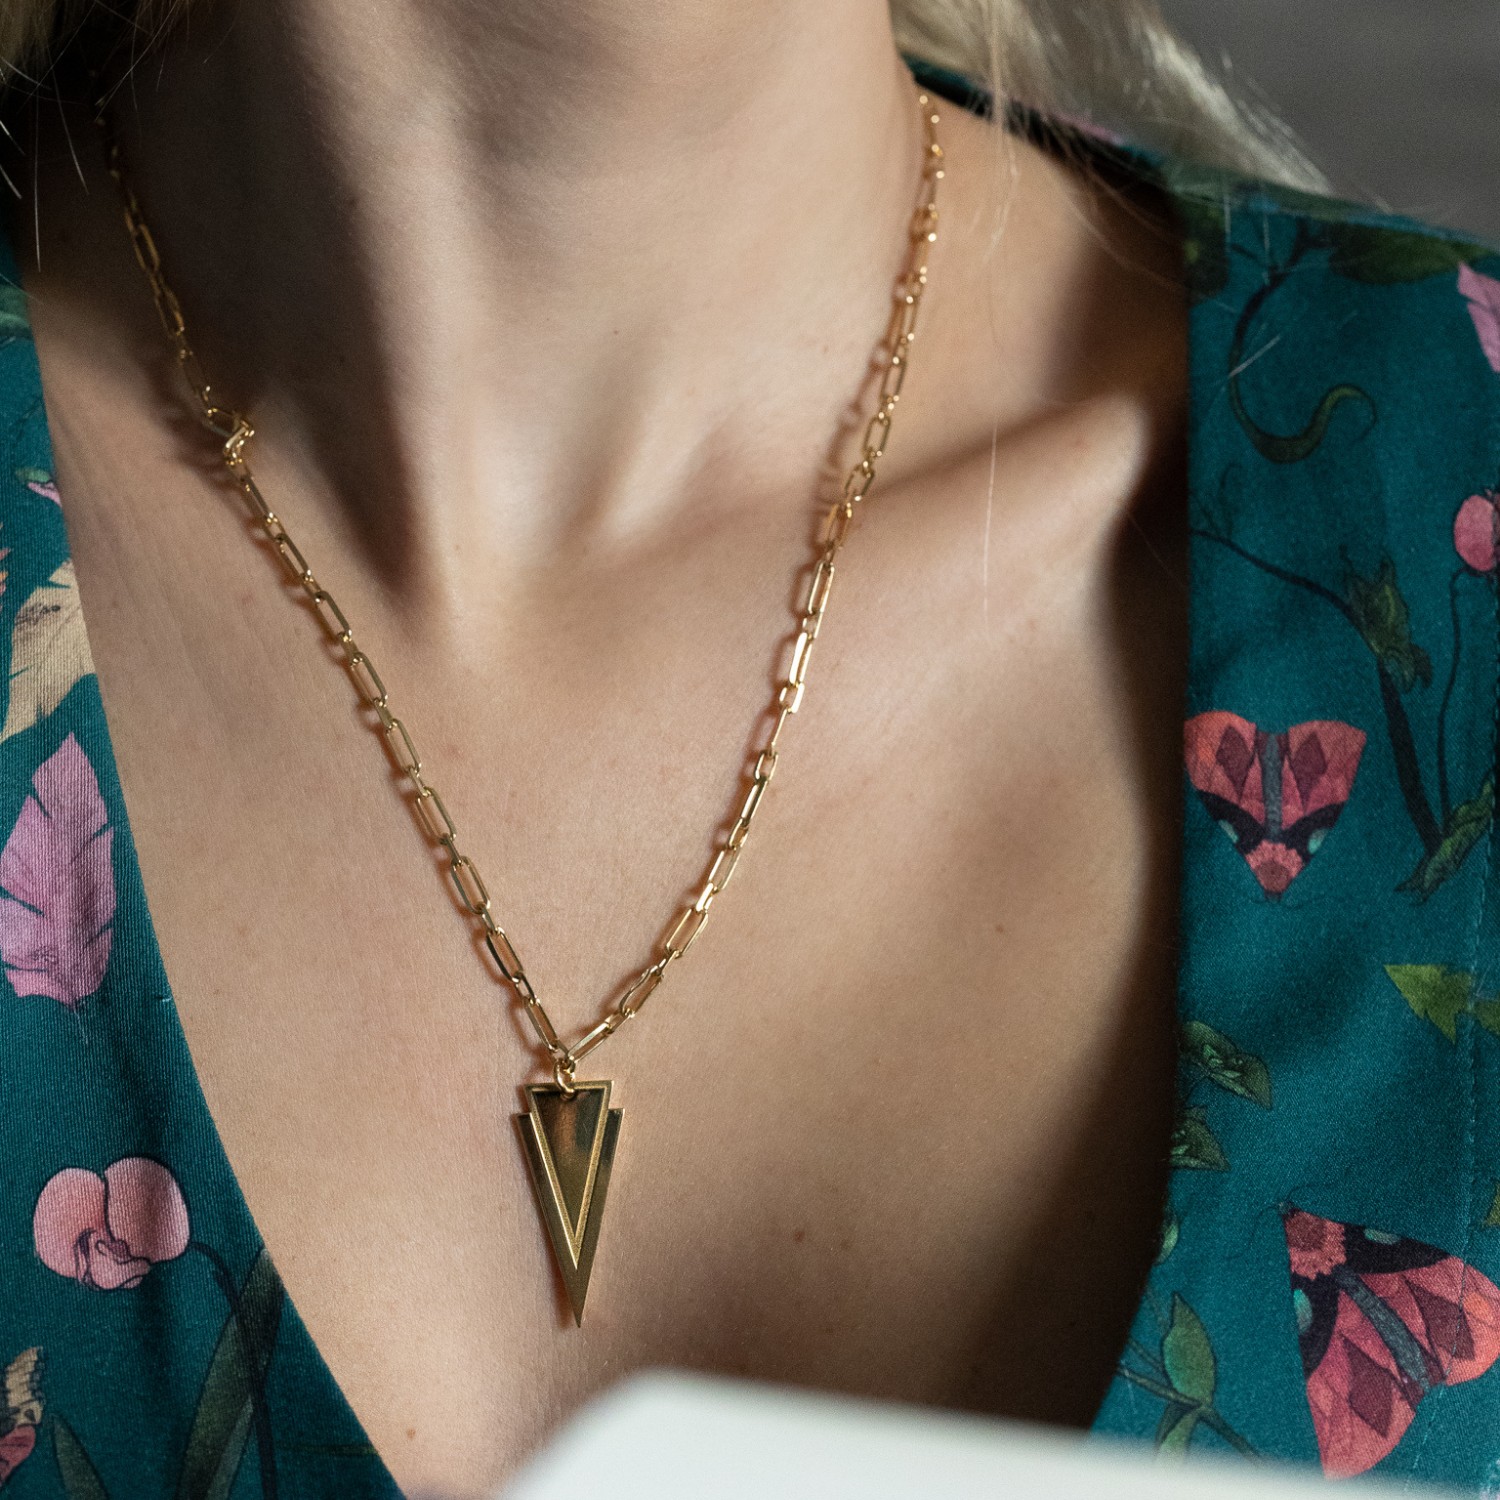 Triangle pendant necklace - Bermuda, Sky&Co, sterling silver 925